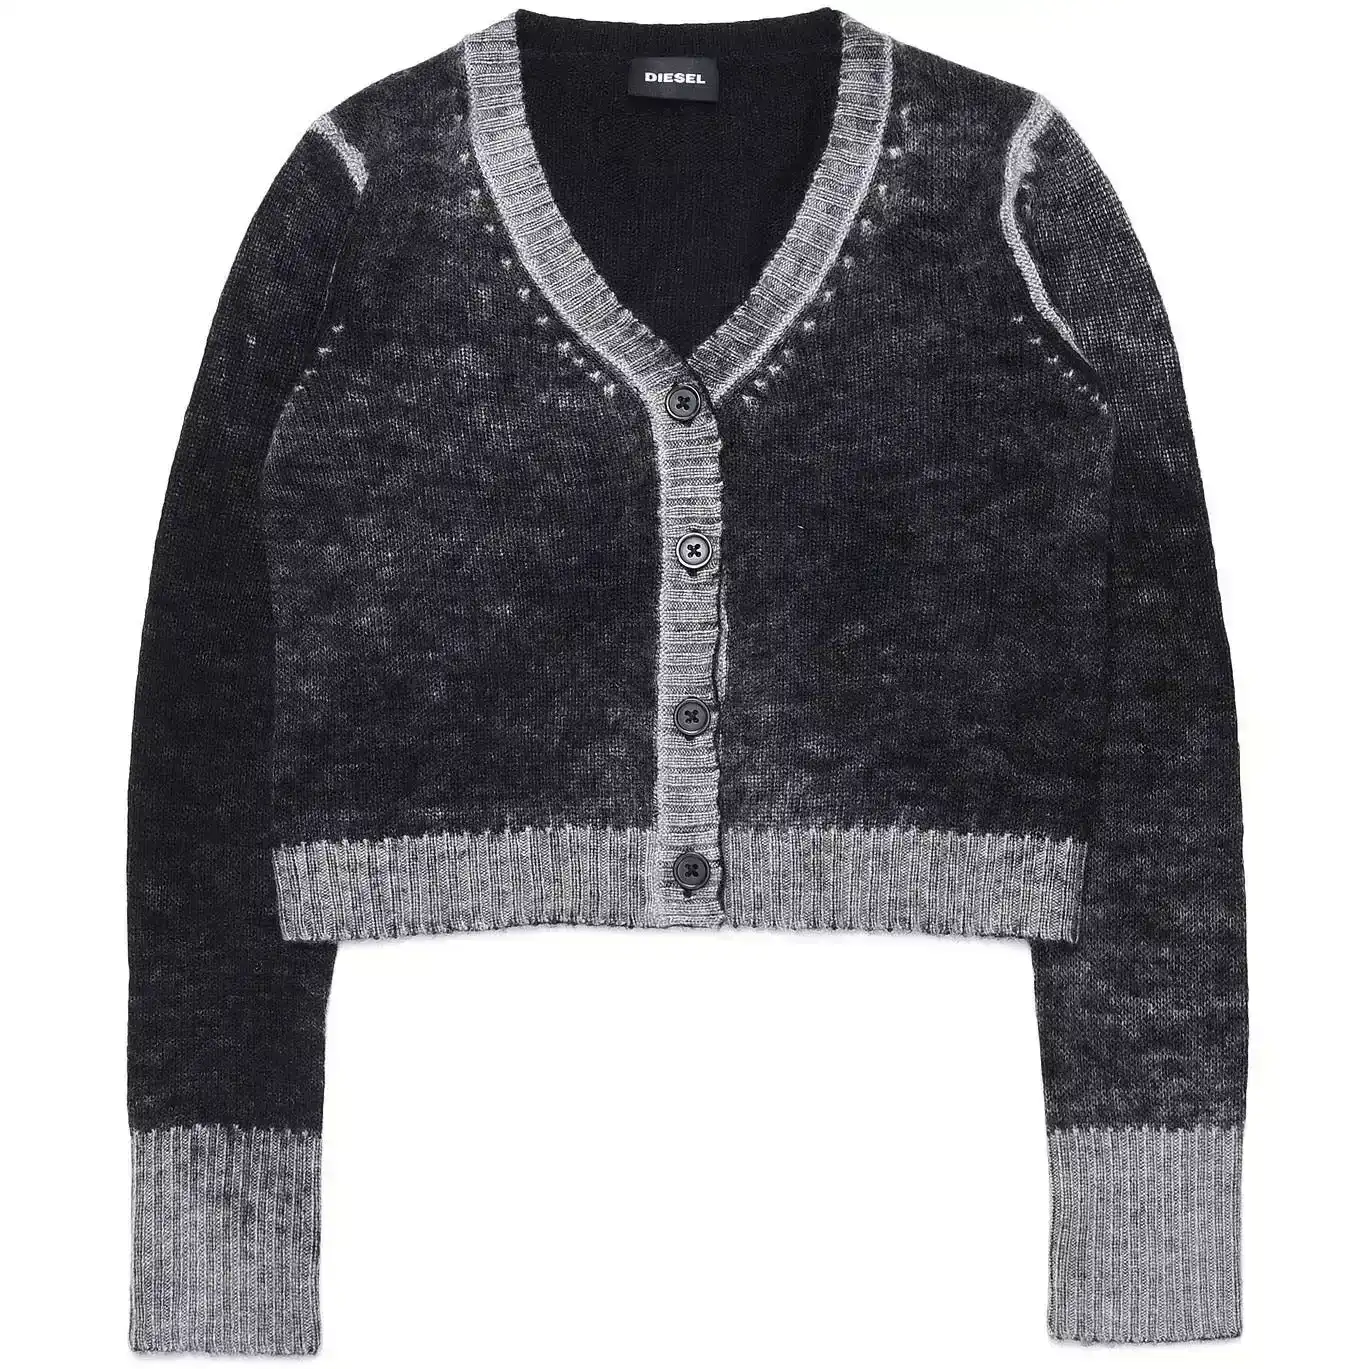 Diesel Kids Unisex Black Wool Cardigan with Grey Stitching